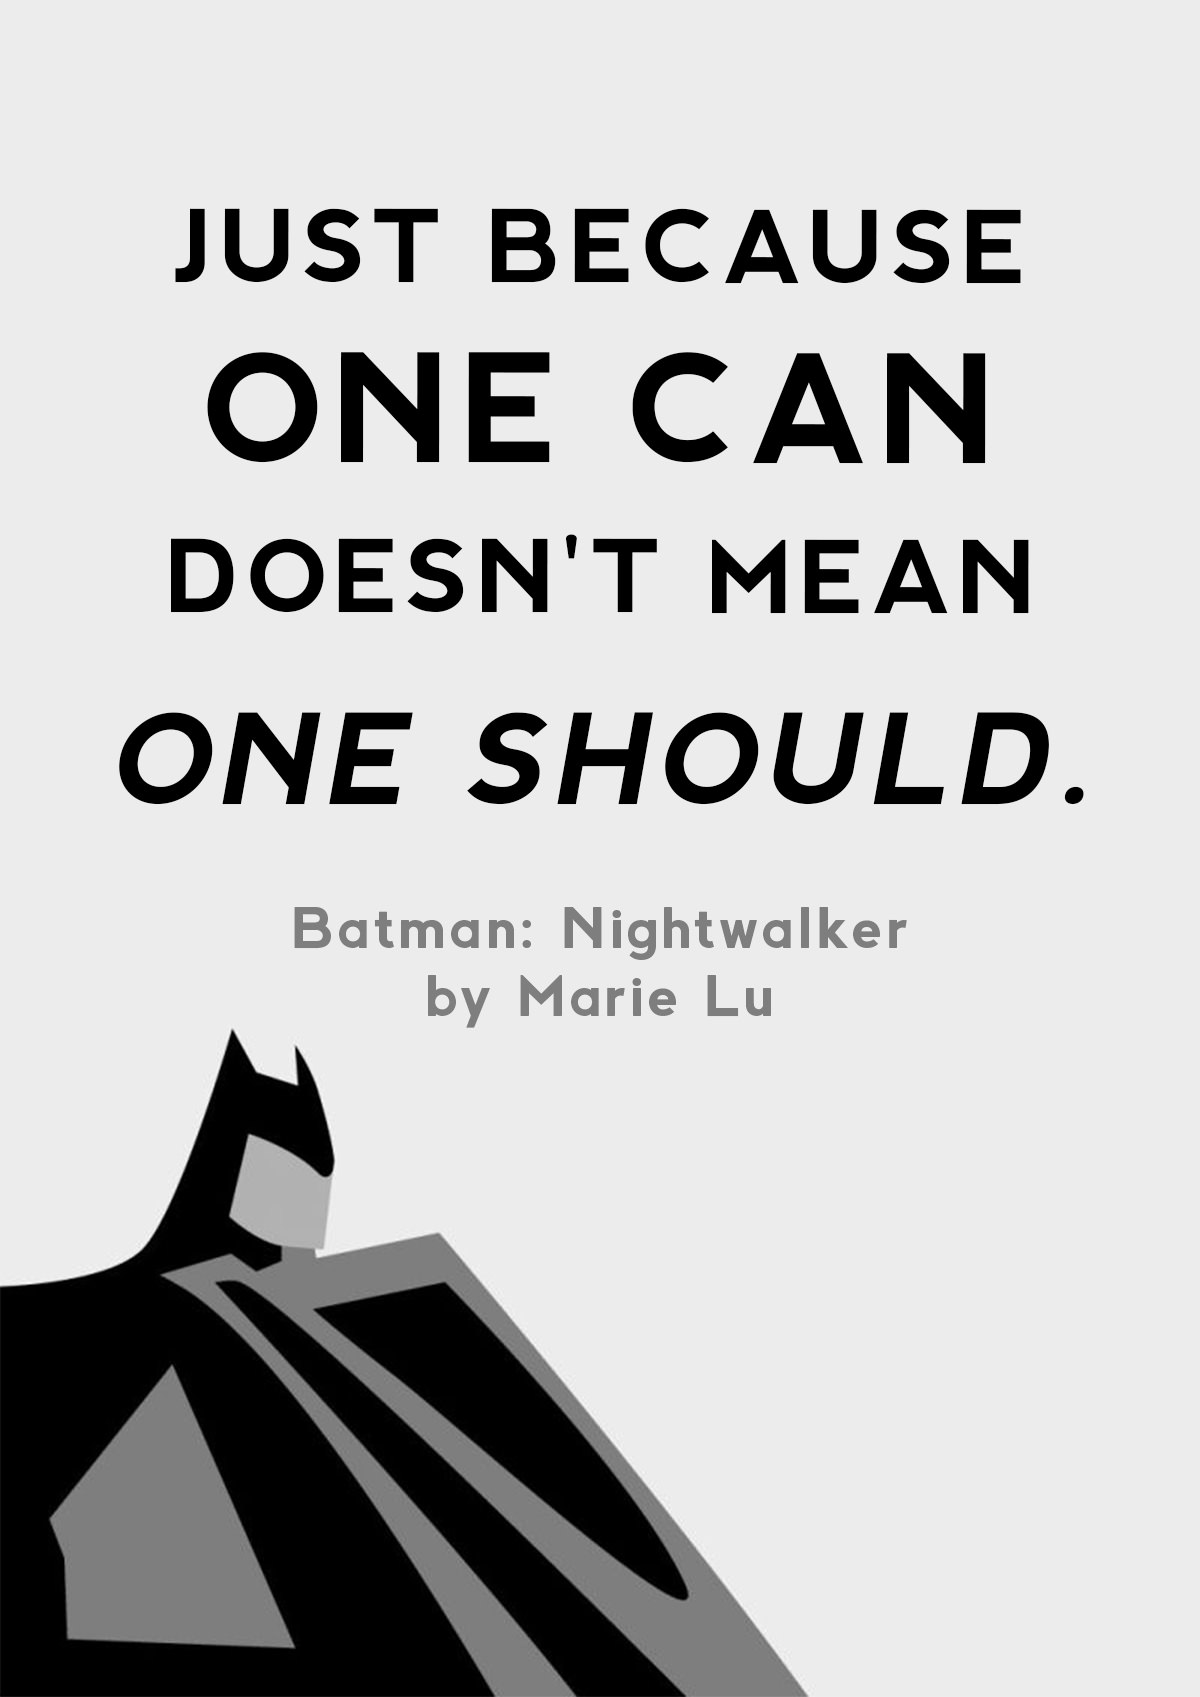 Batman Nightwalker by Marie Lu Quote - Just Because